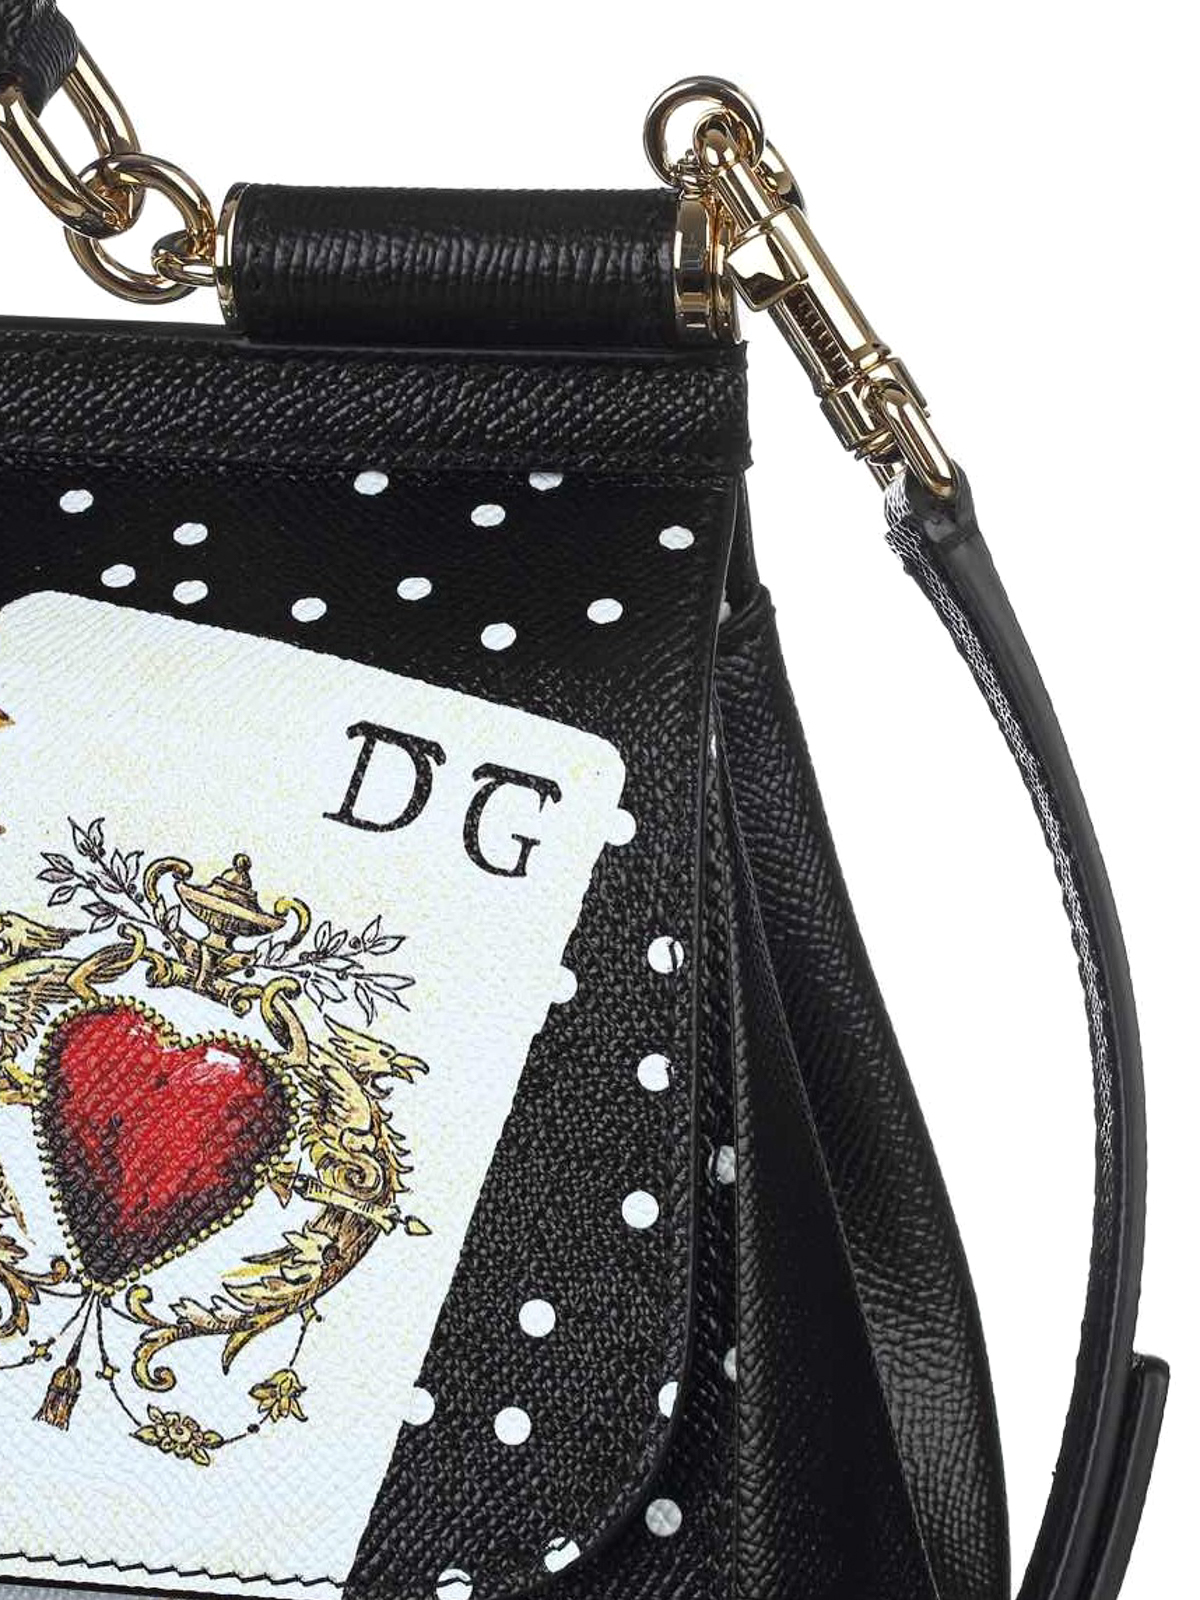 Dolce & Gabbana Mediu,M Sicily Bag In Dauphine Leather